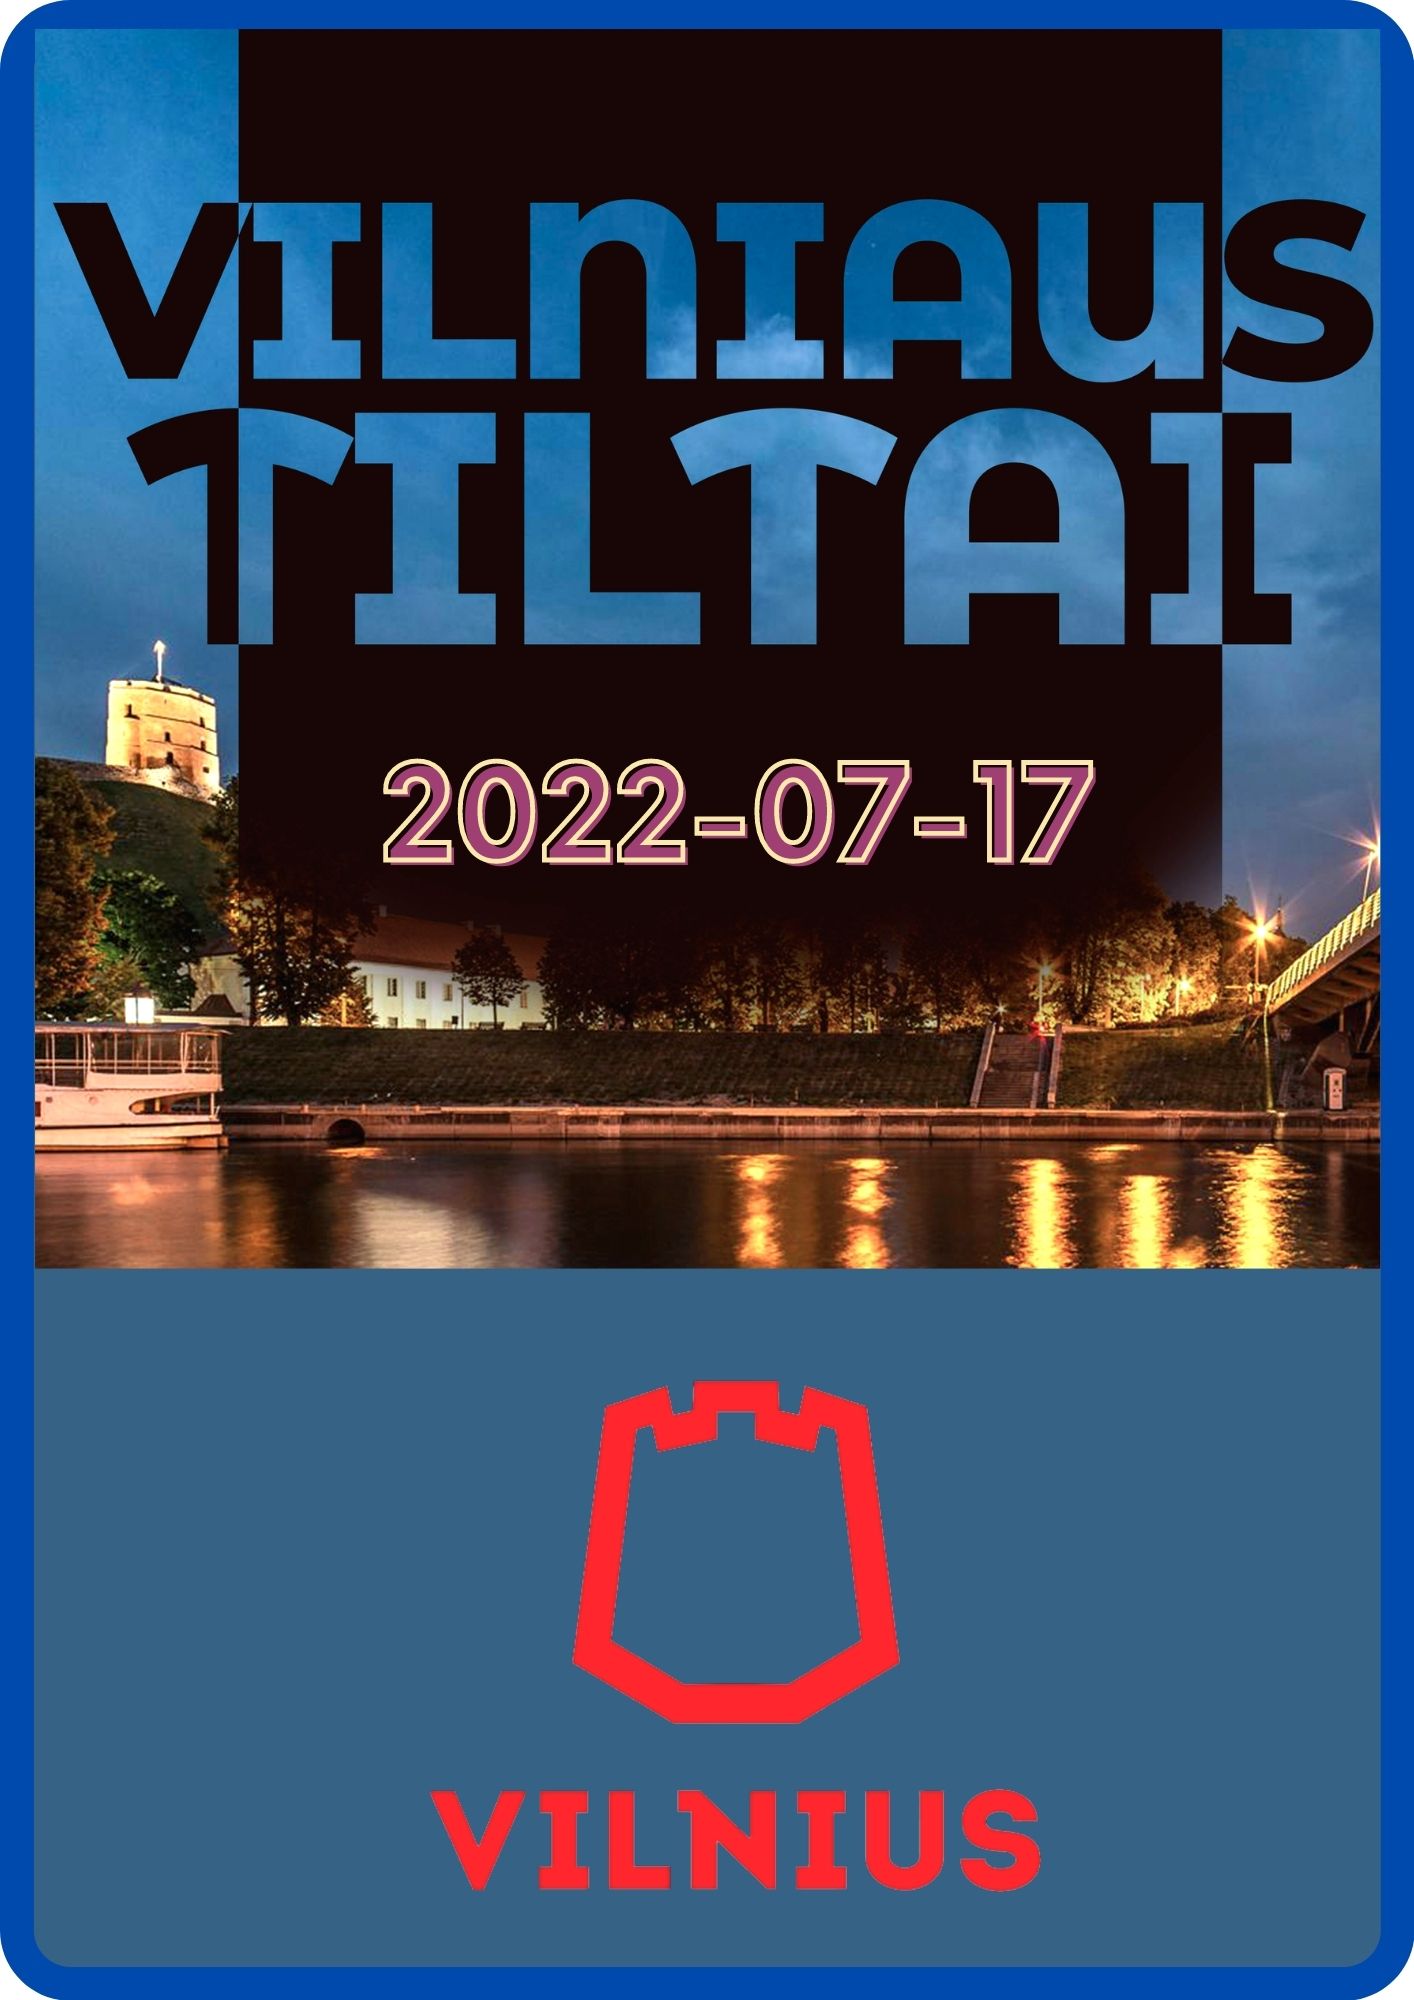 Vilniaus tiltai